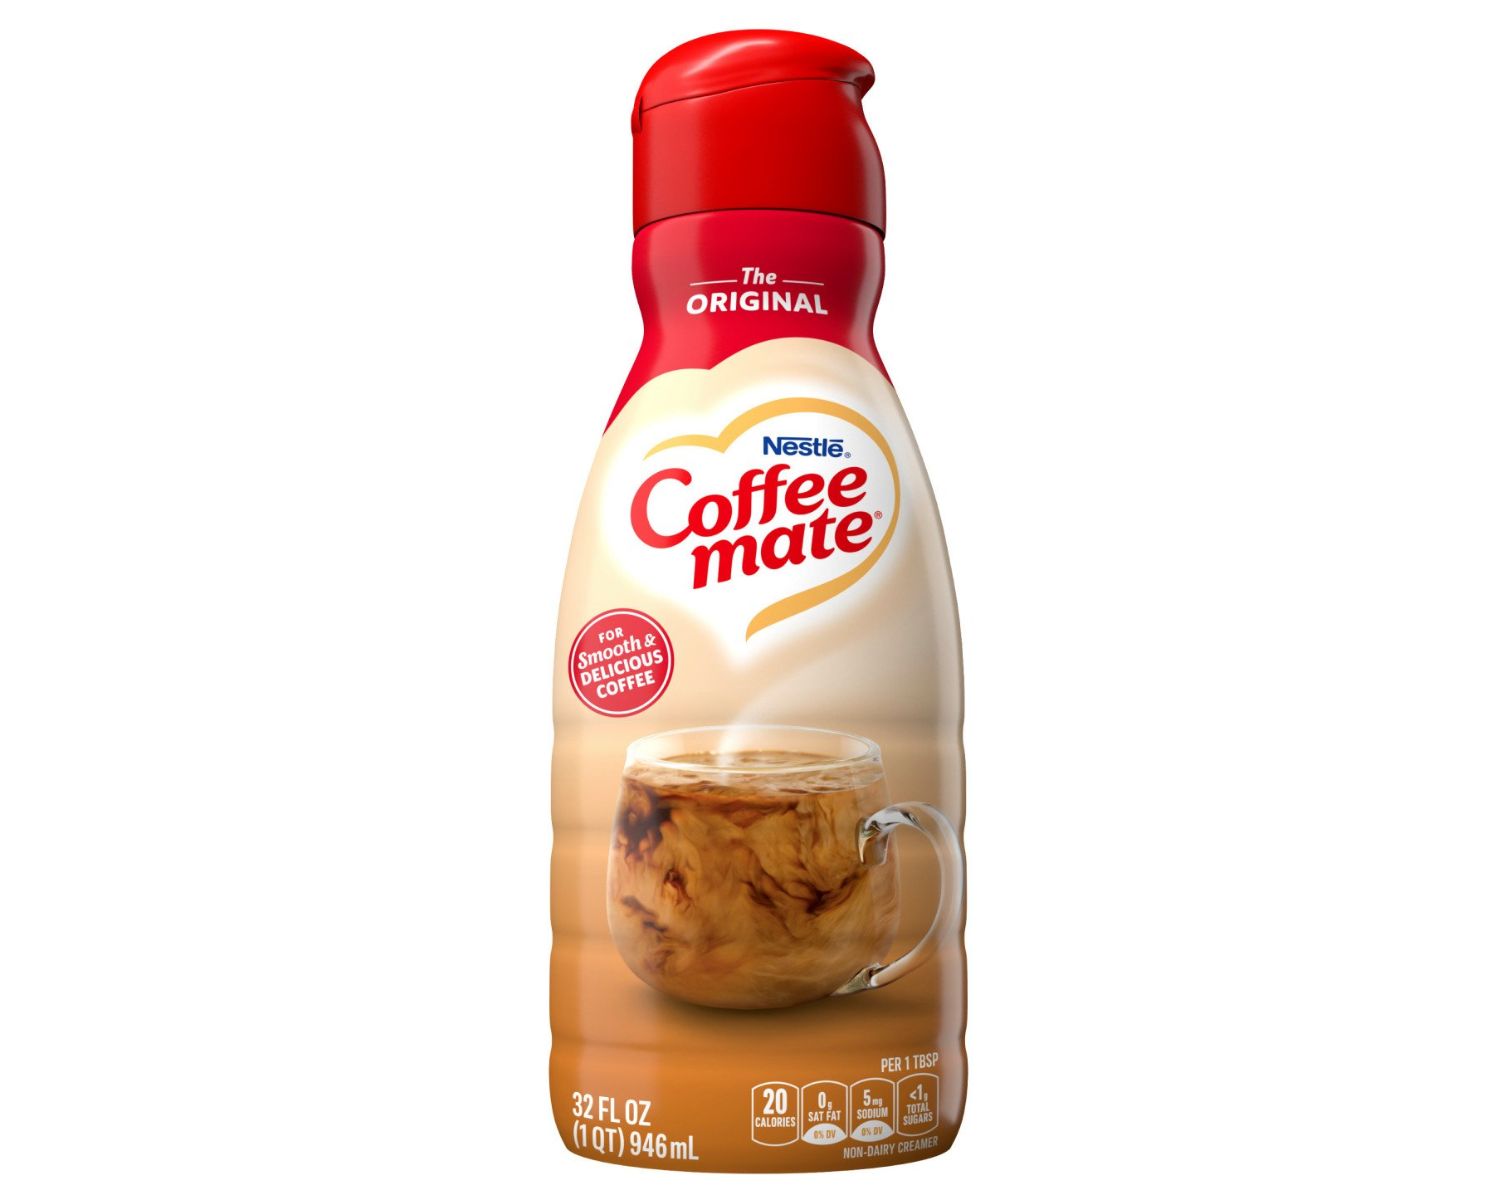 19 Coffee Mate Original Liquid Creamer Nutrition Facts - Facts.net